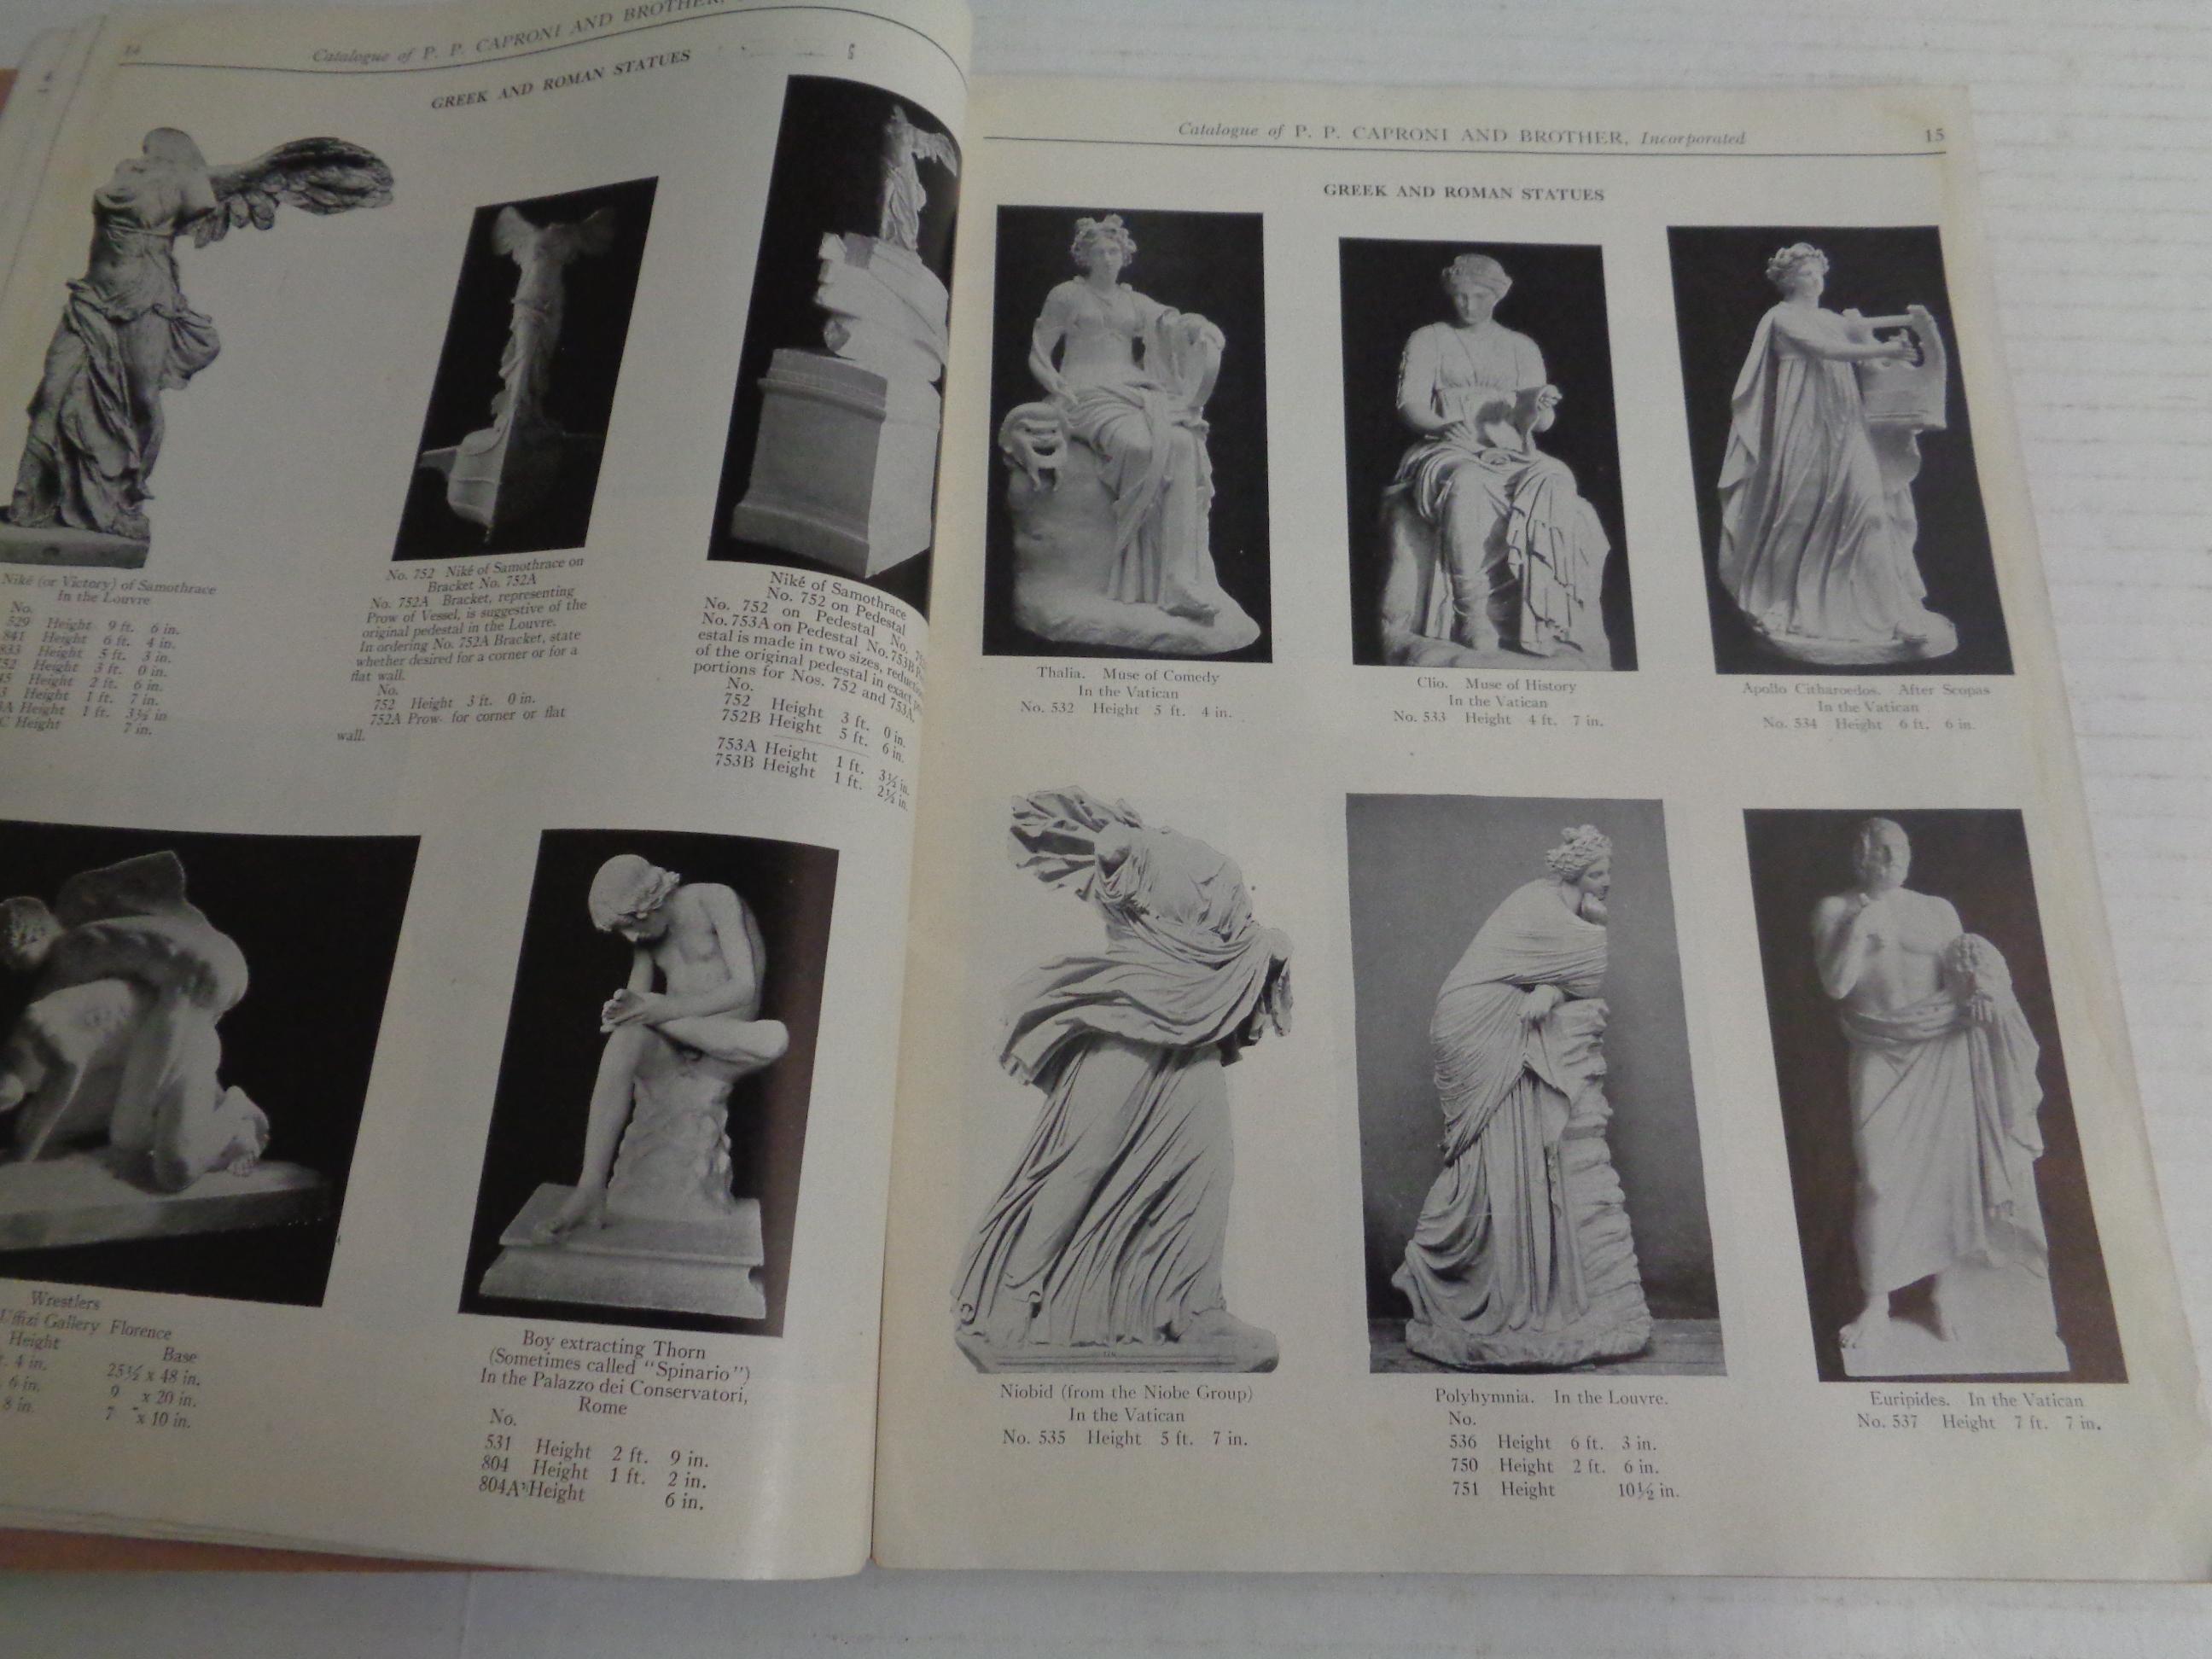 Caproni Casts : Chefs-d'œuvre de la sculpture - Catalogue 1932 Caproni Brothers  Bon état - En vente à Rochester, NY